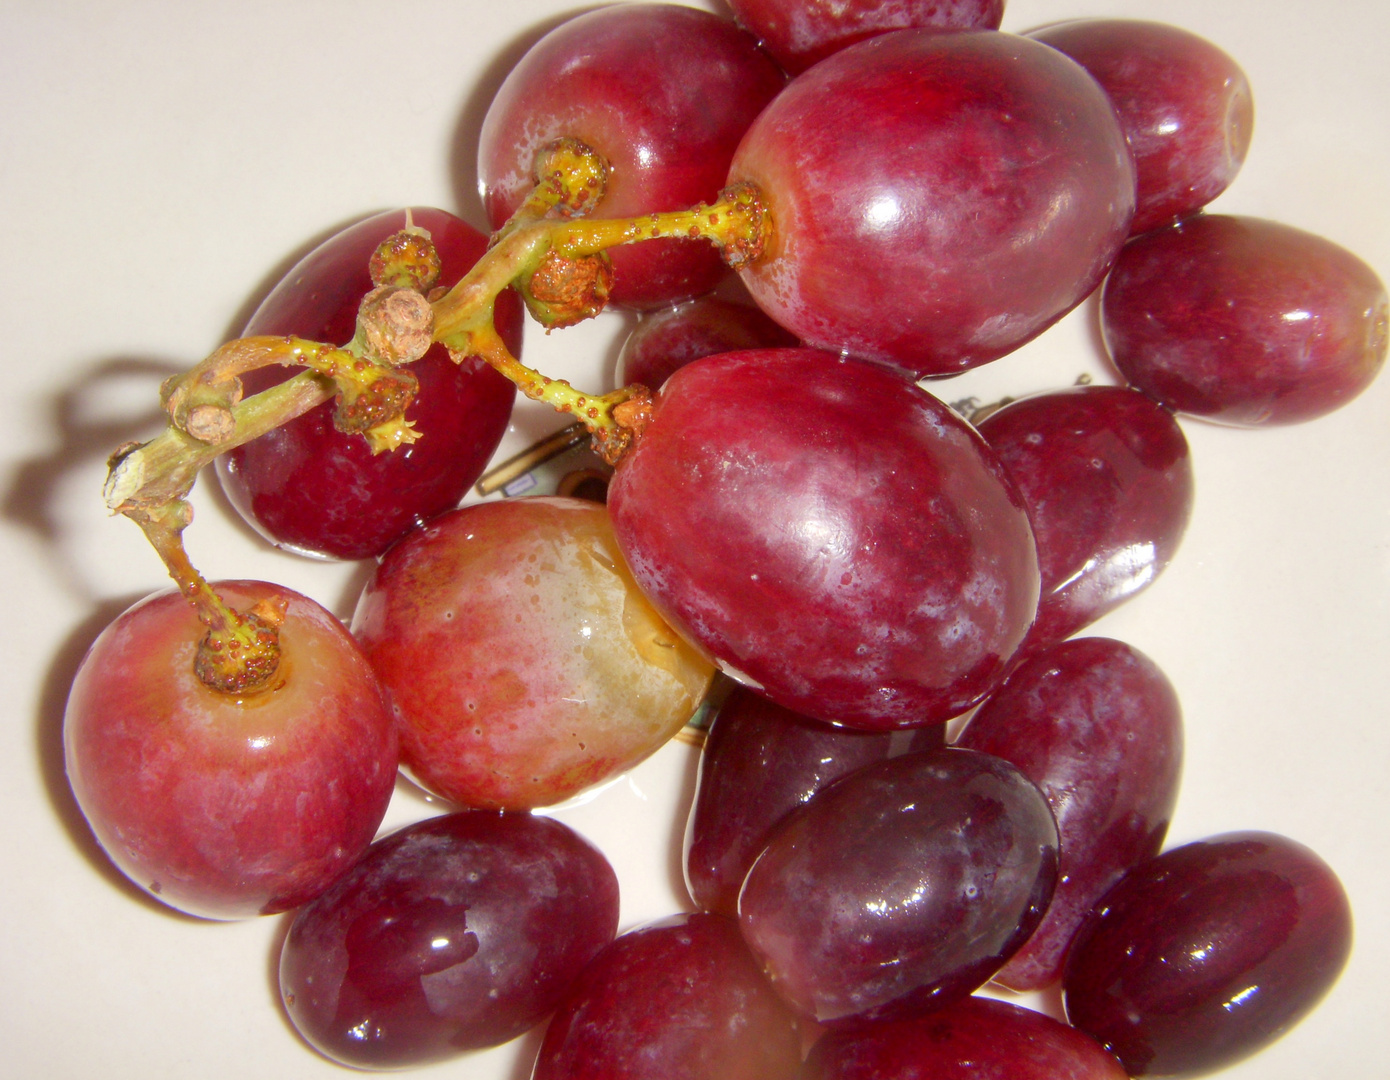 "California Produce: Scarlotta Red Seedless Grapes"